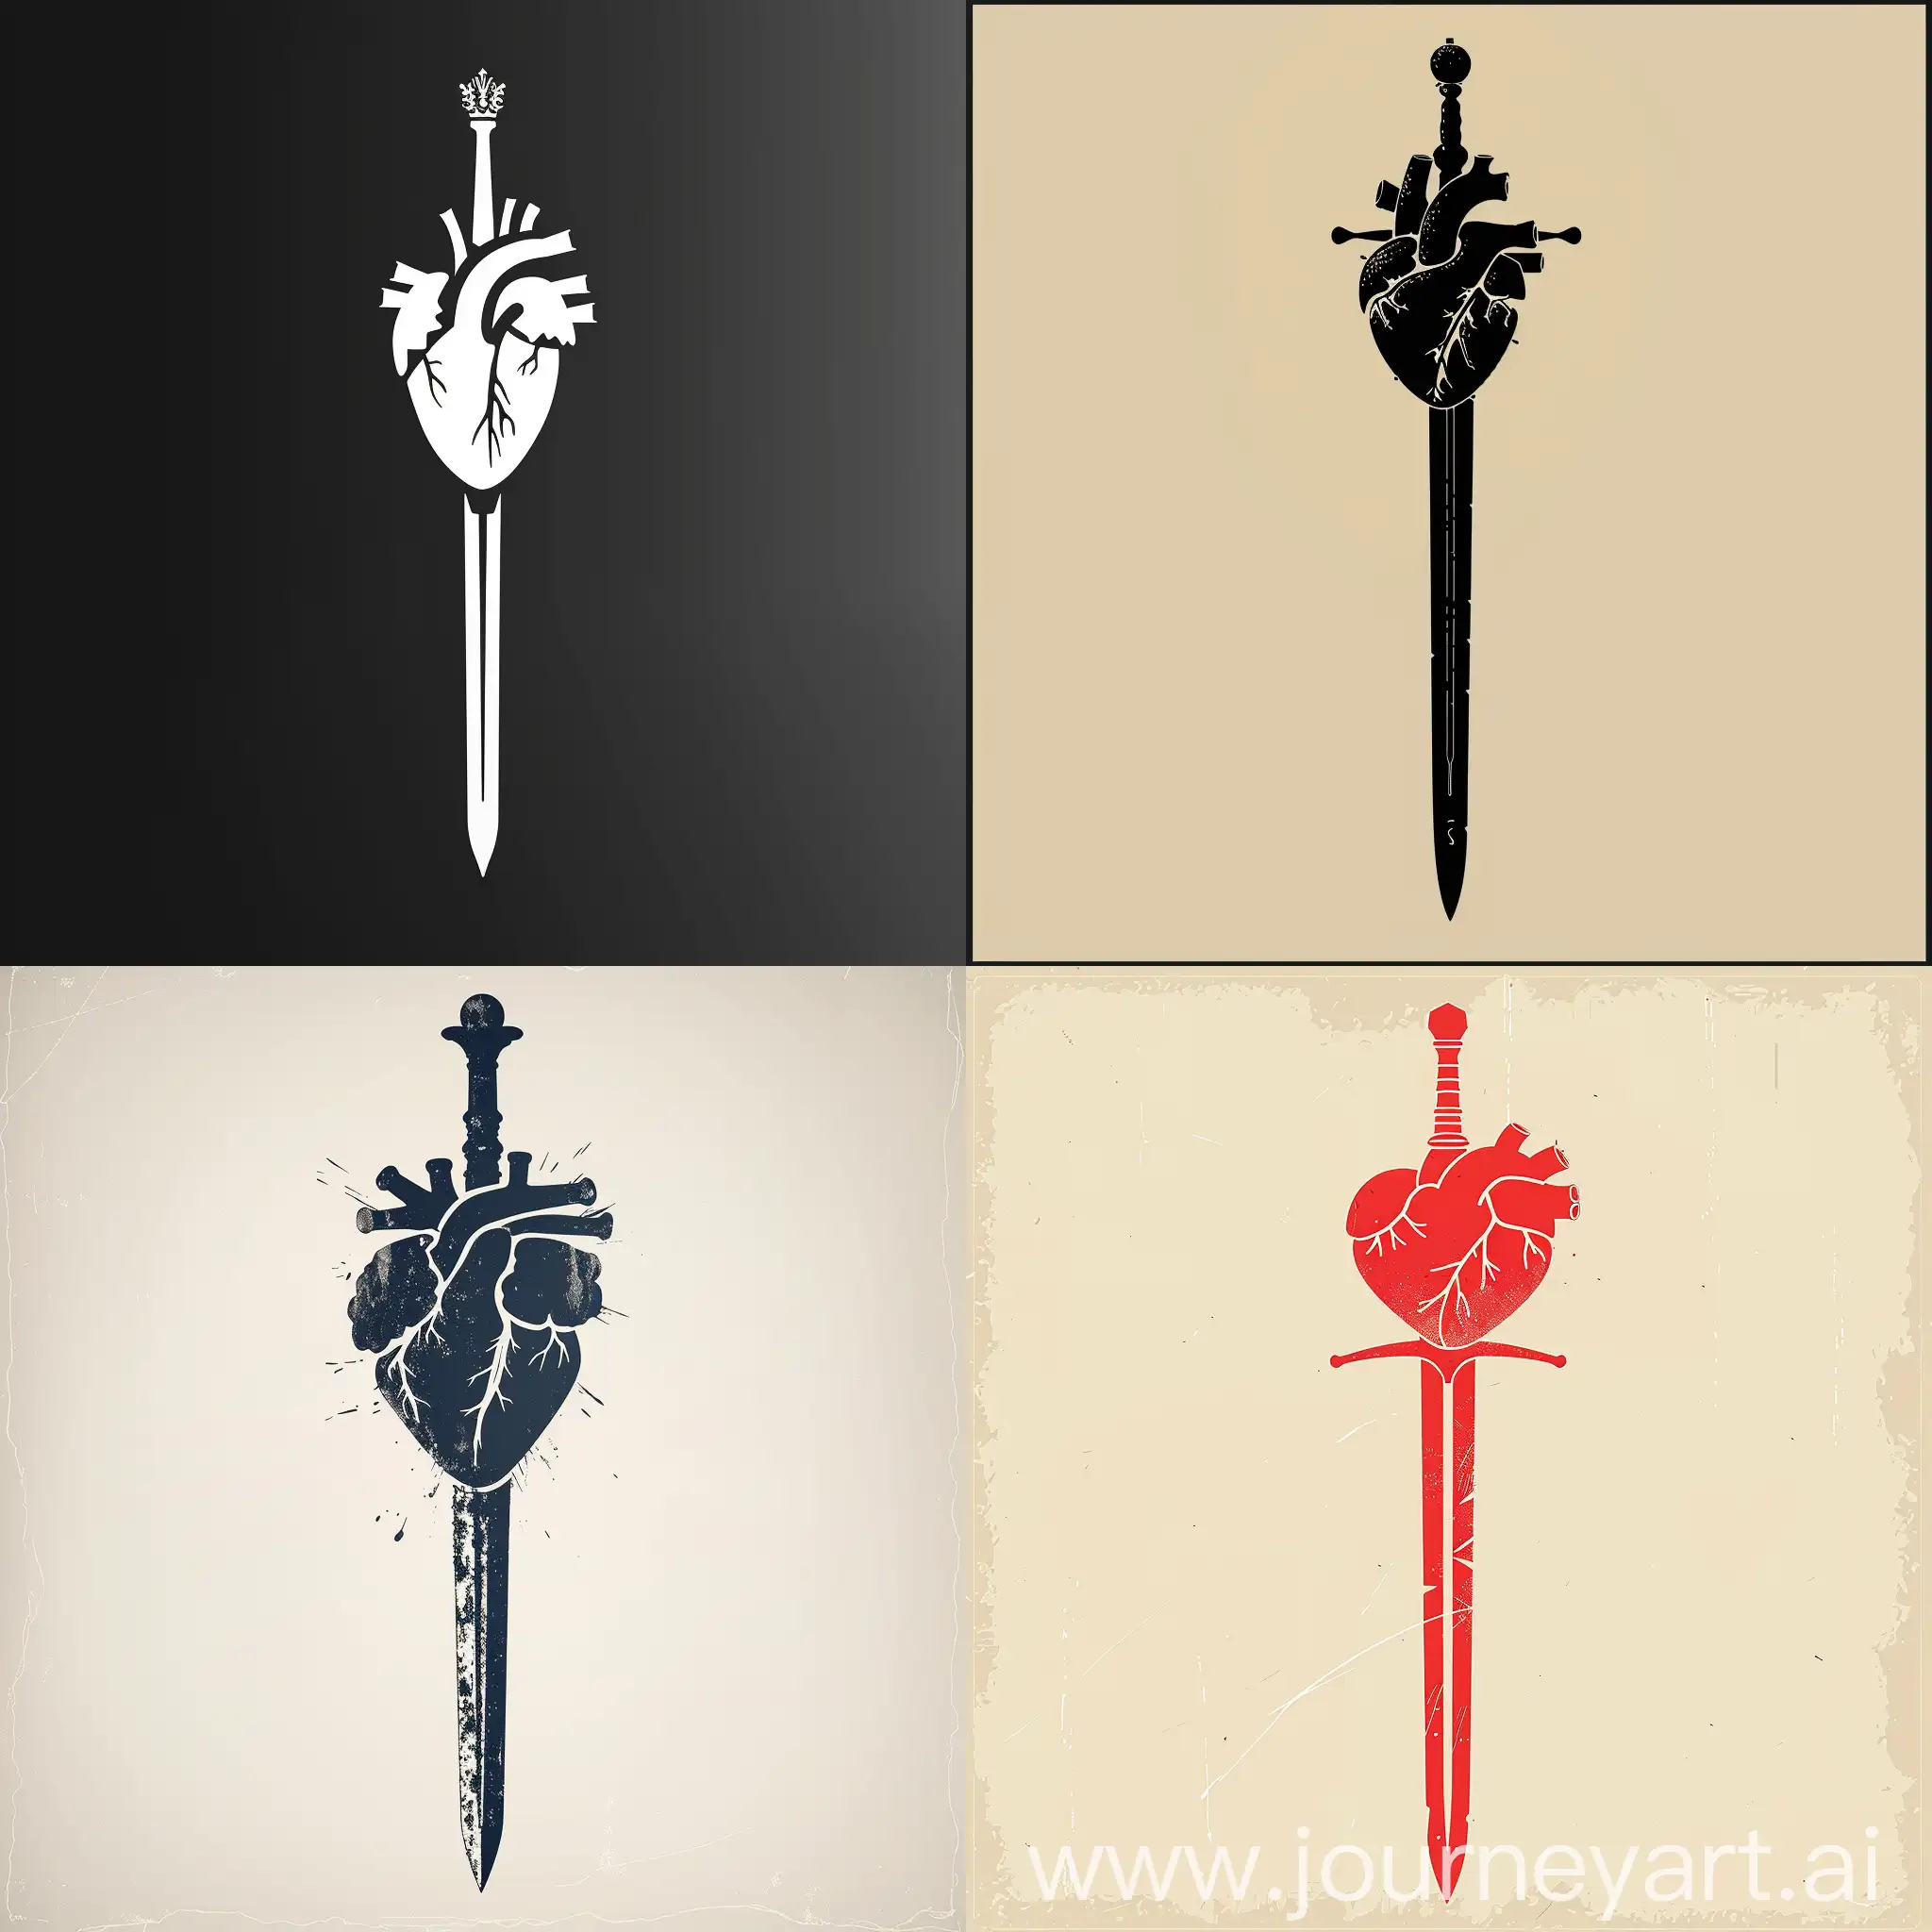 A minimalist silhouette of a human heart wielded by sword